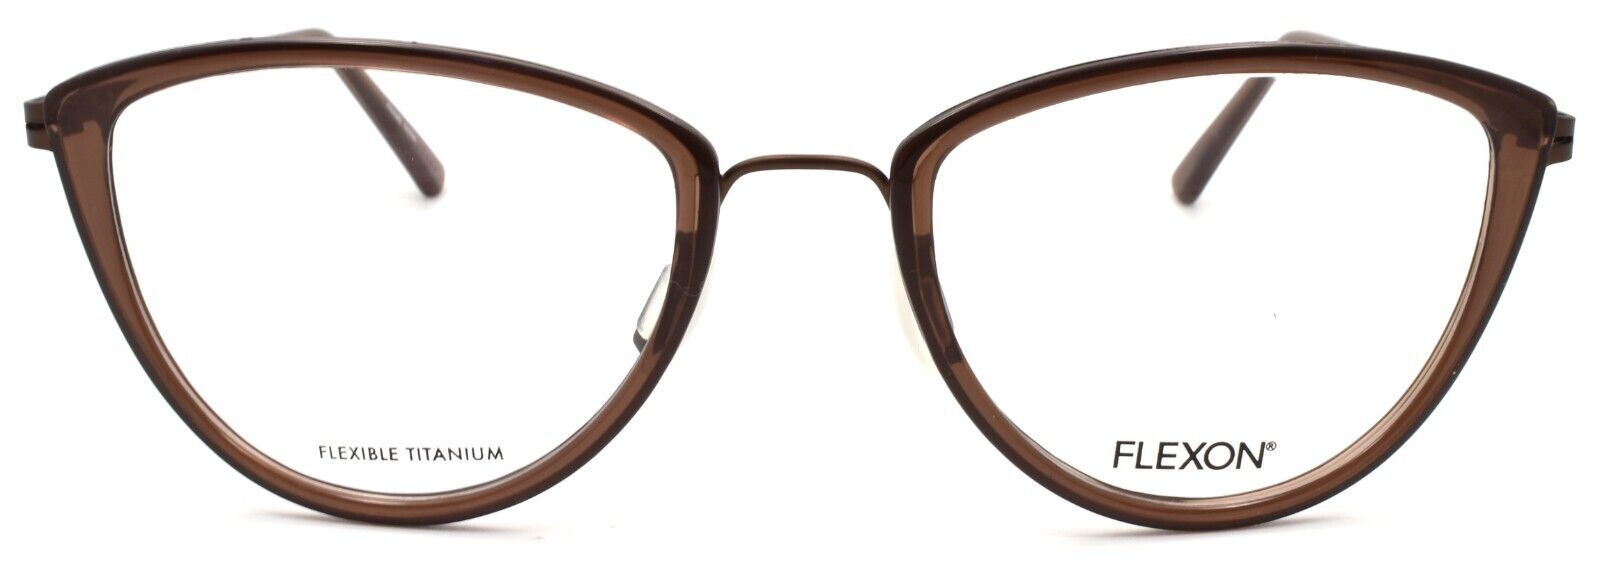 2-Flexon W3020 210 Women's Eyeglasses Frames Brown 52-21-140 Flexible Titanium-883900205269-IKSpecs